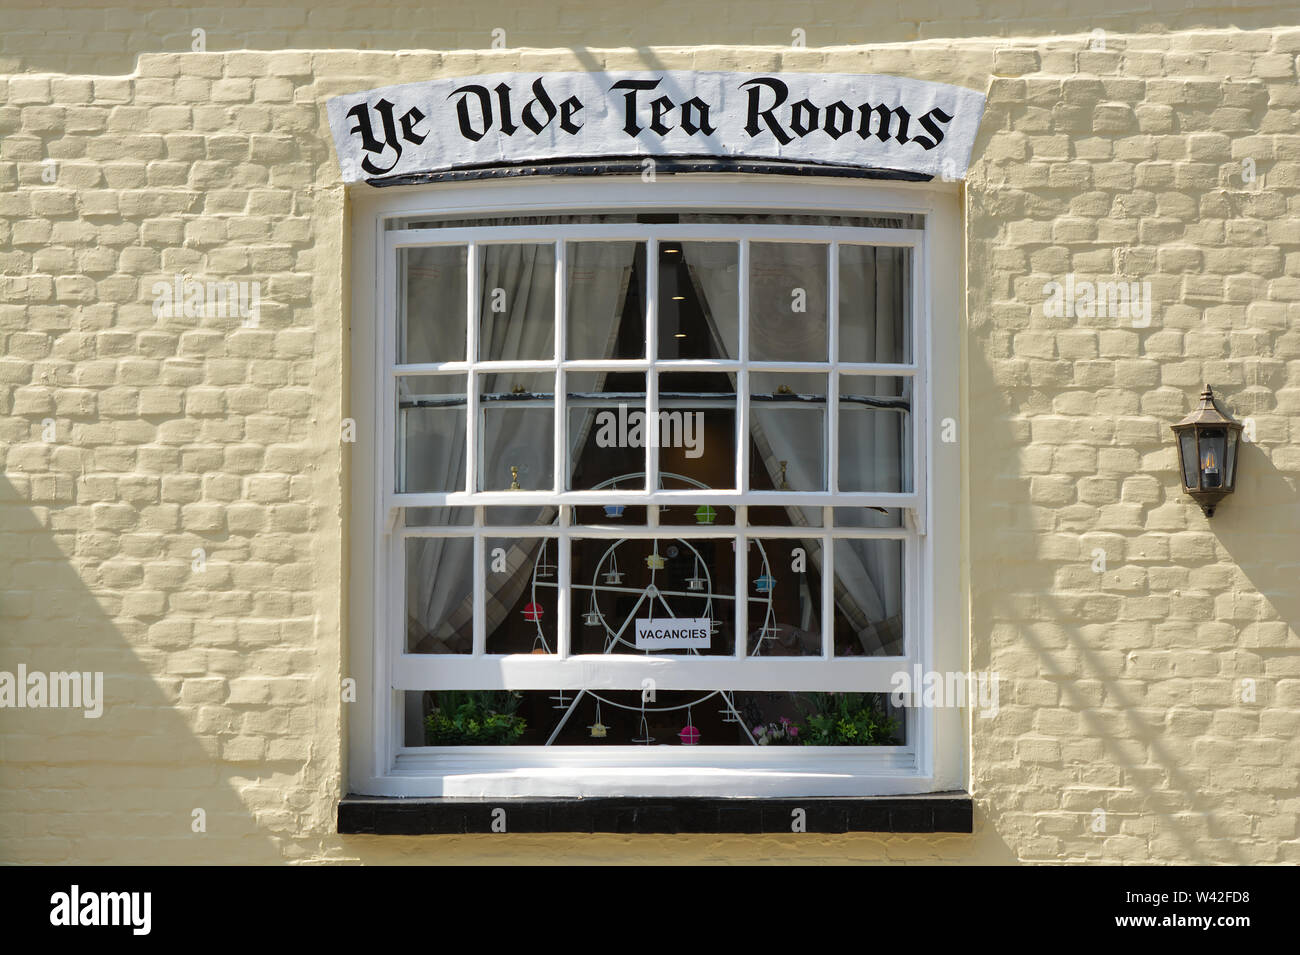 Ye Olde Tea Rooms sign over window in brick wall, England Stock Photo